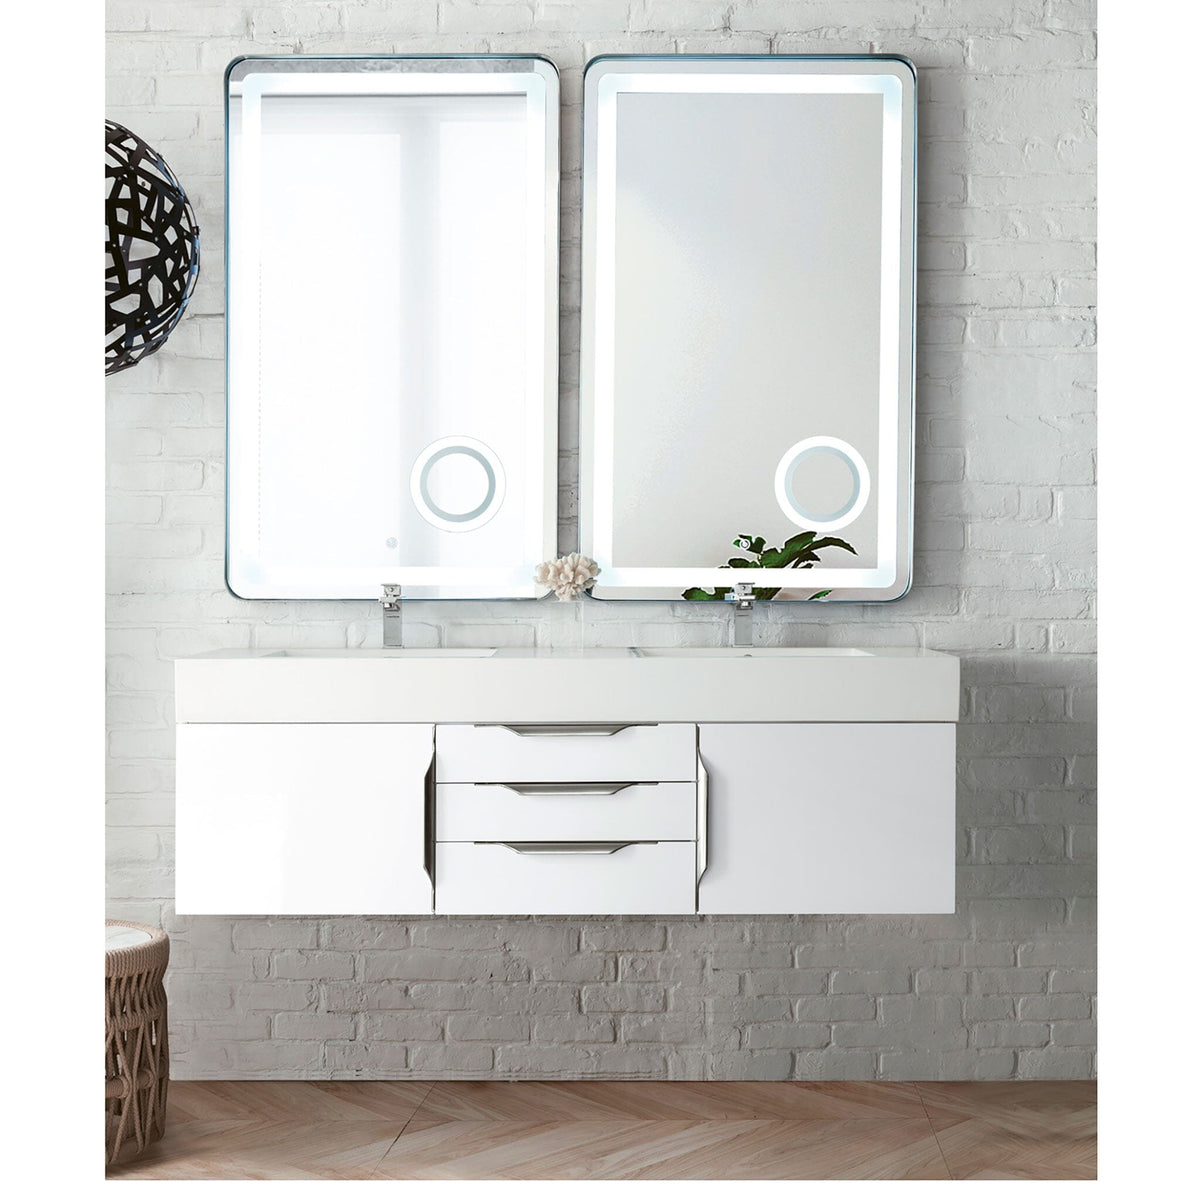 59" Mercer Island Double Bathroom Vanity, Glossy White